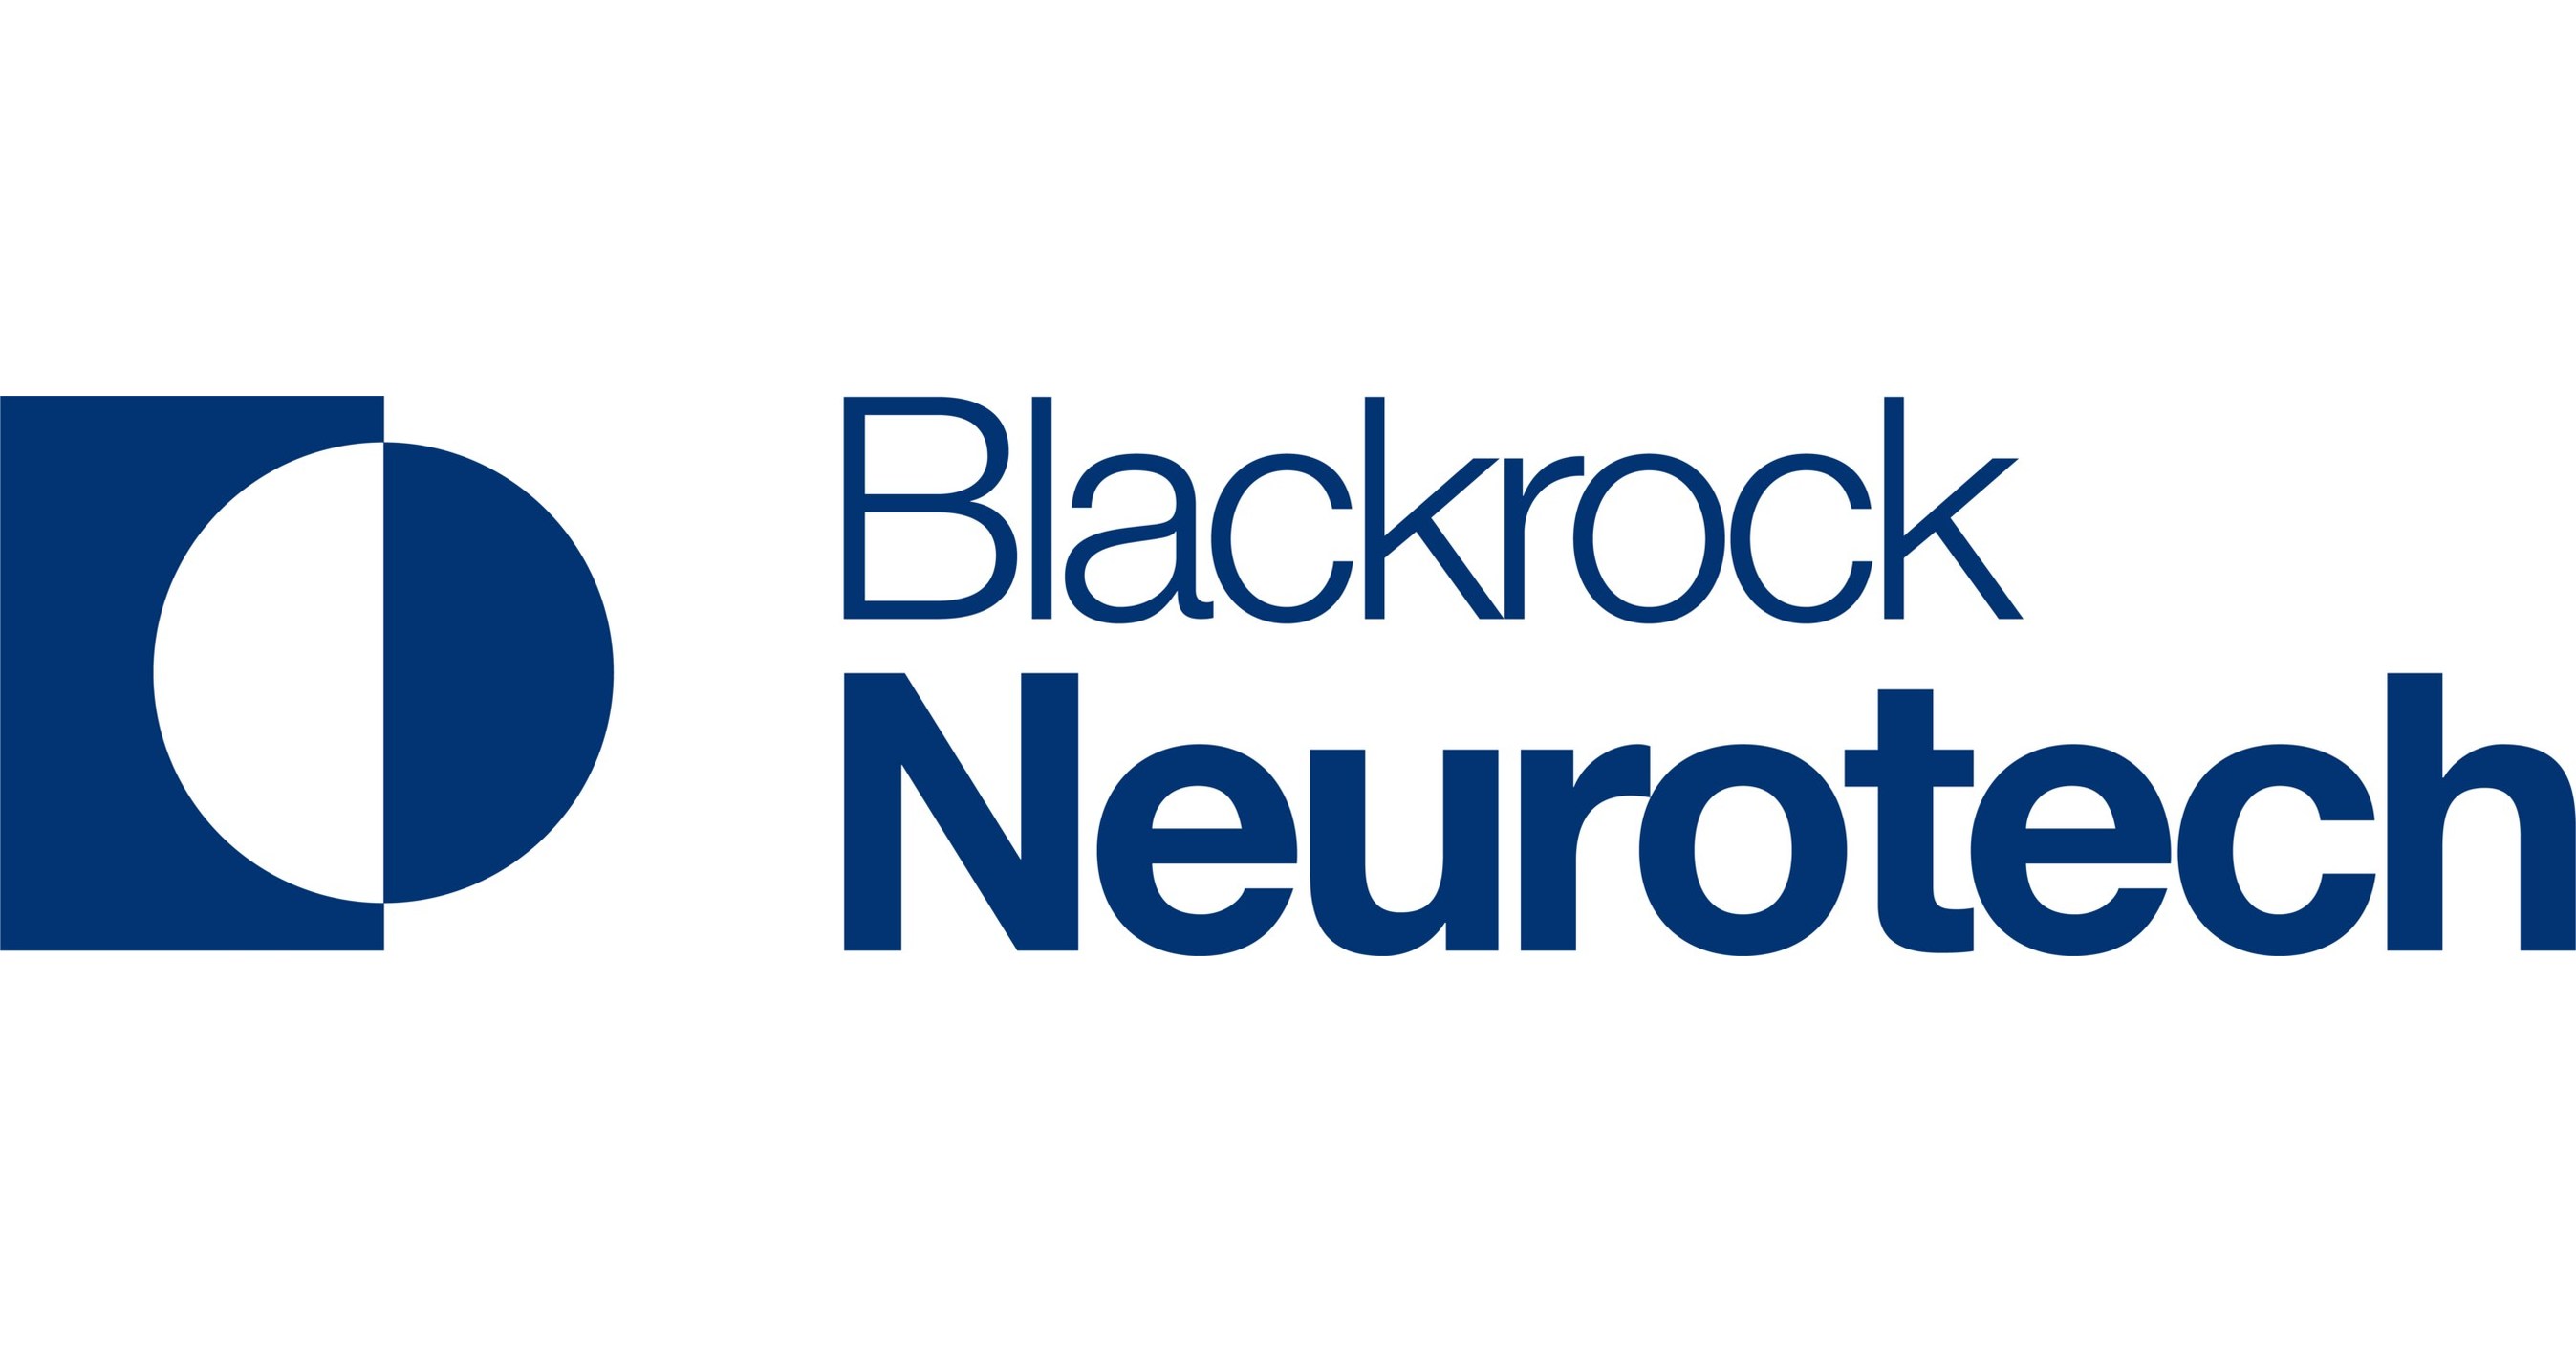 Blackrock Neurotech Closes M Financing Round To Advance Development Of Its World-Leading Brain-Computer Interface (BCI) Technology